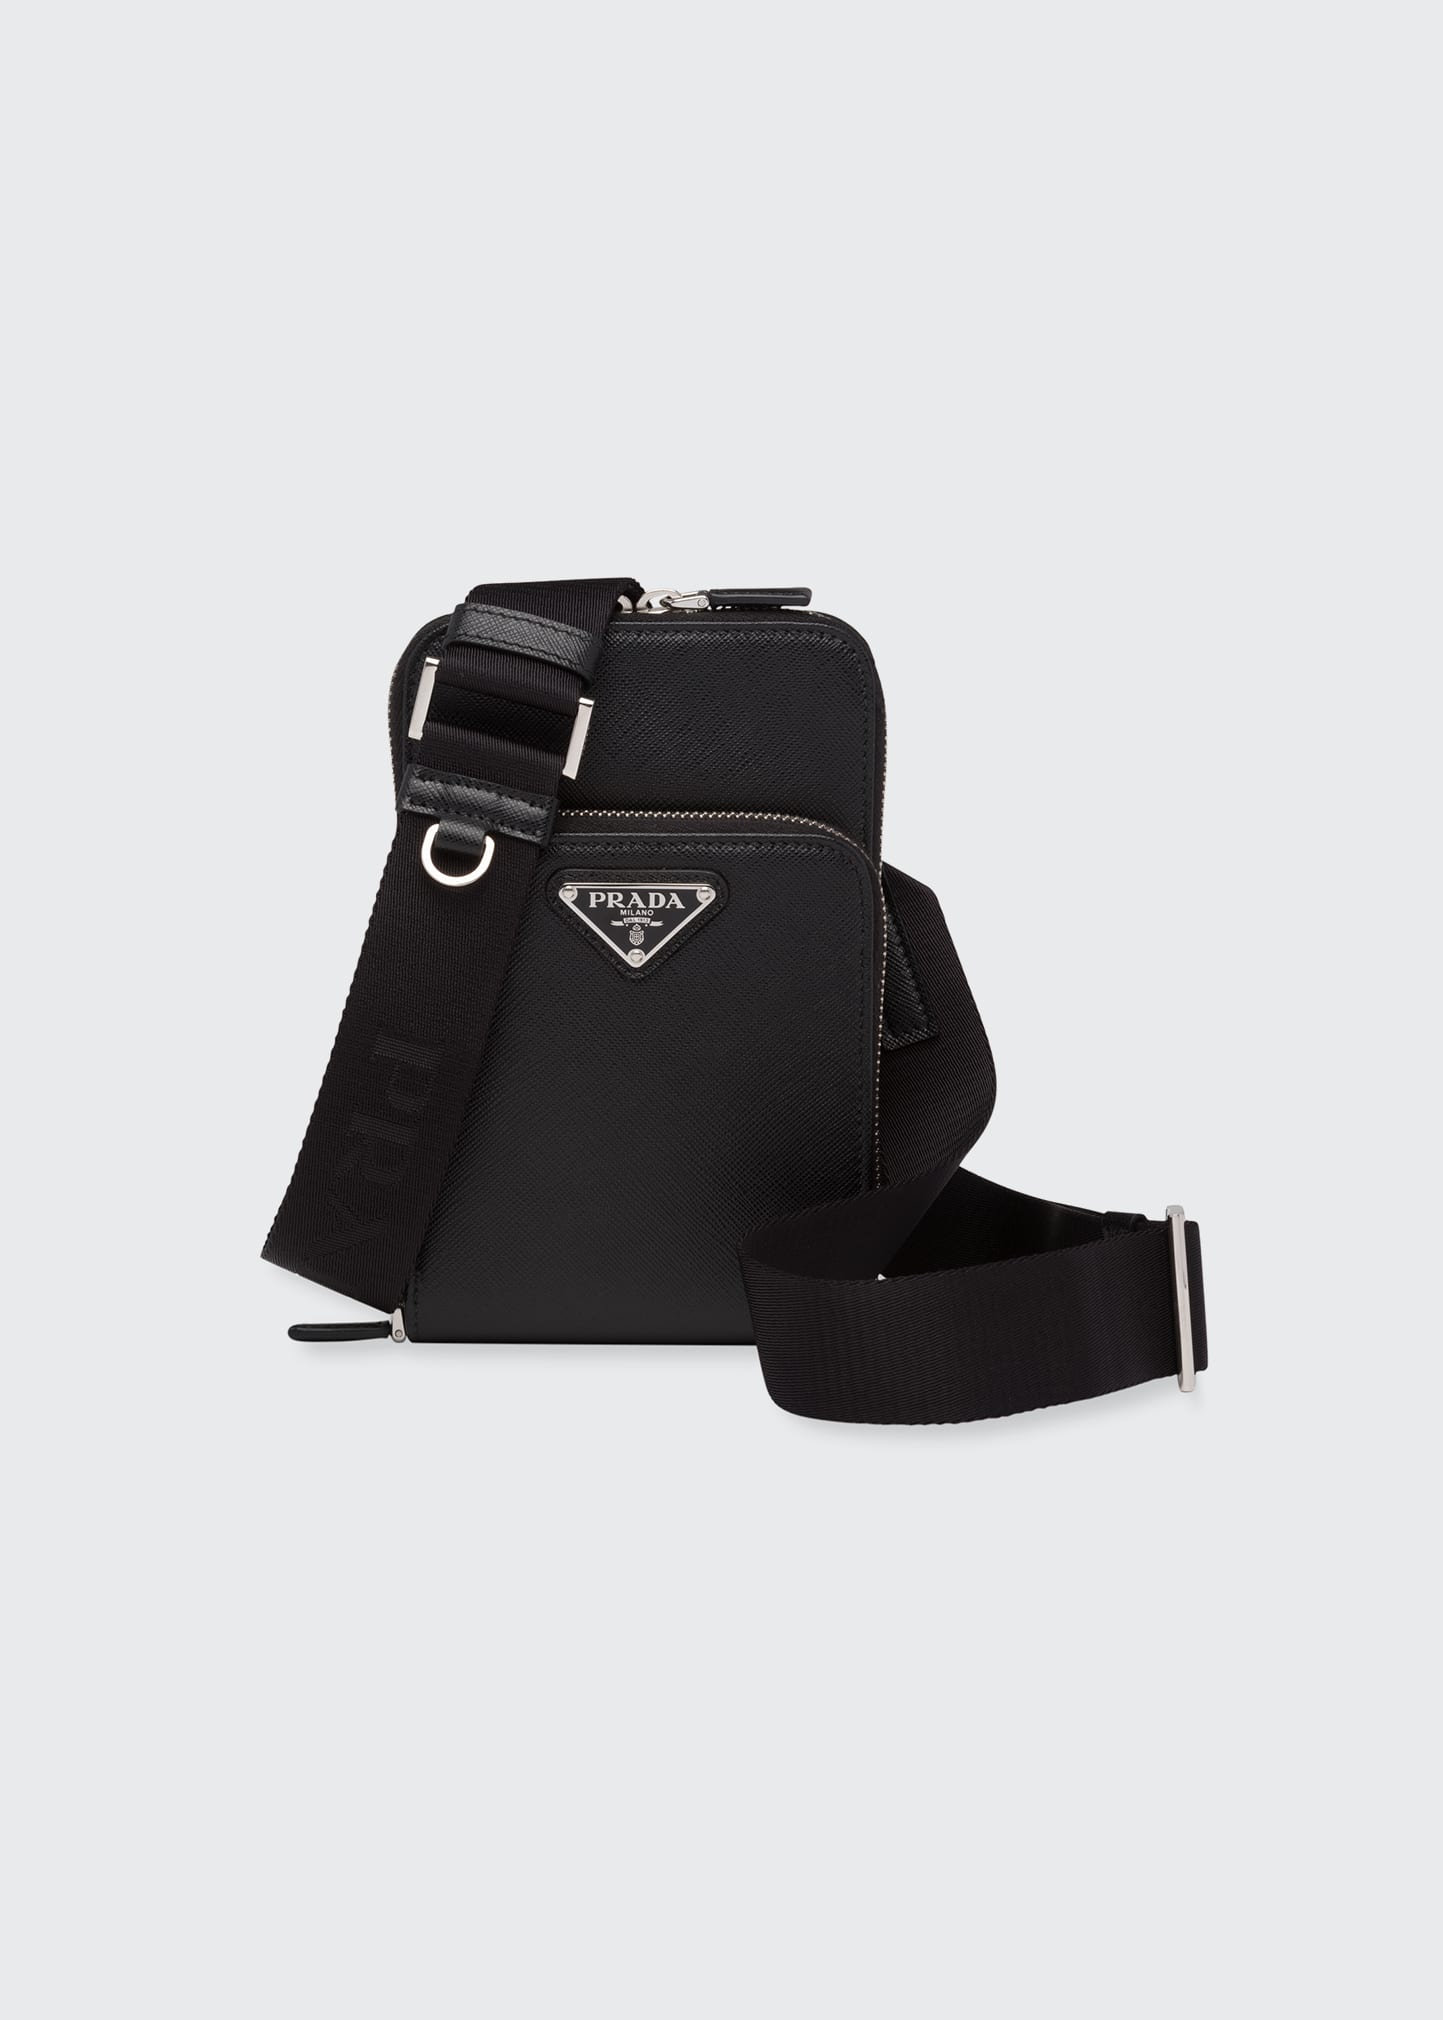 Prada Men's Saffiano Minibag In Black